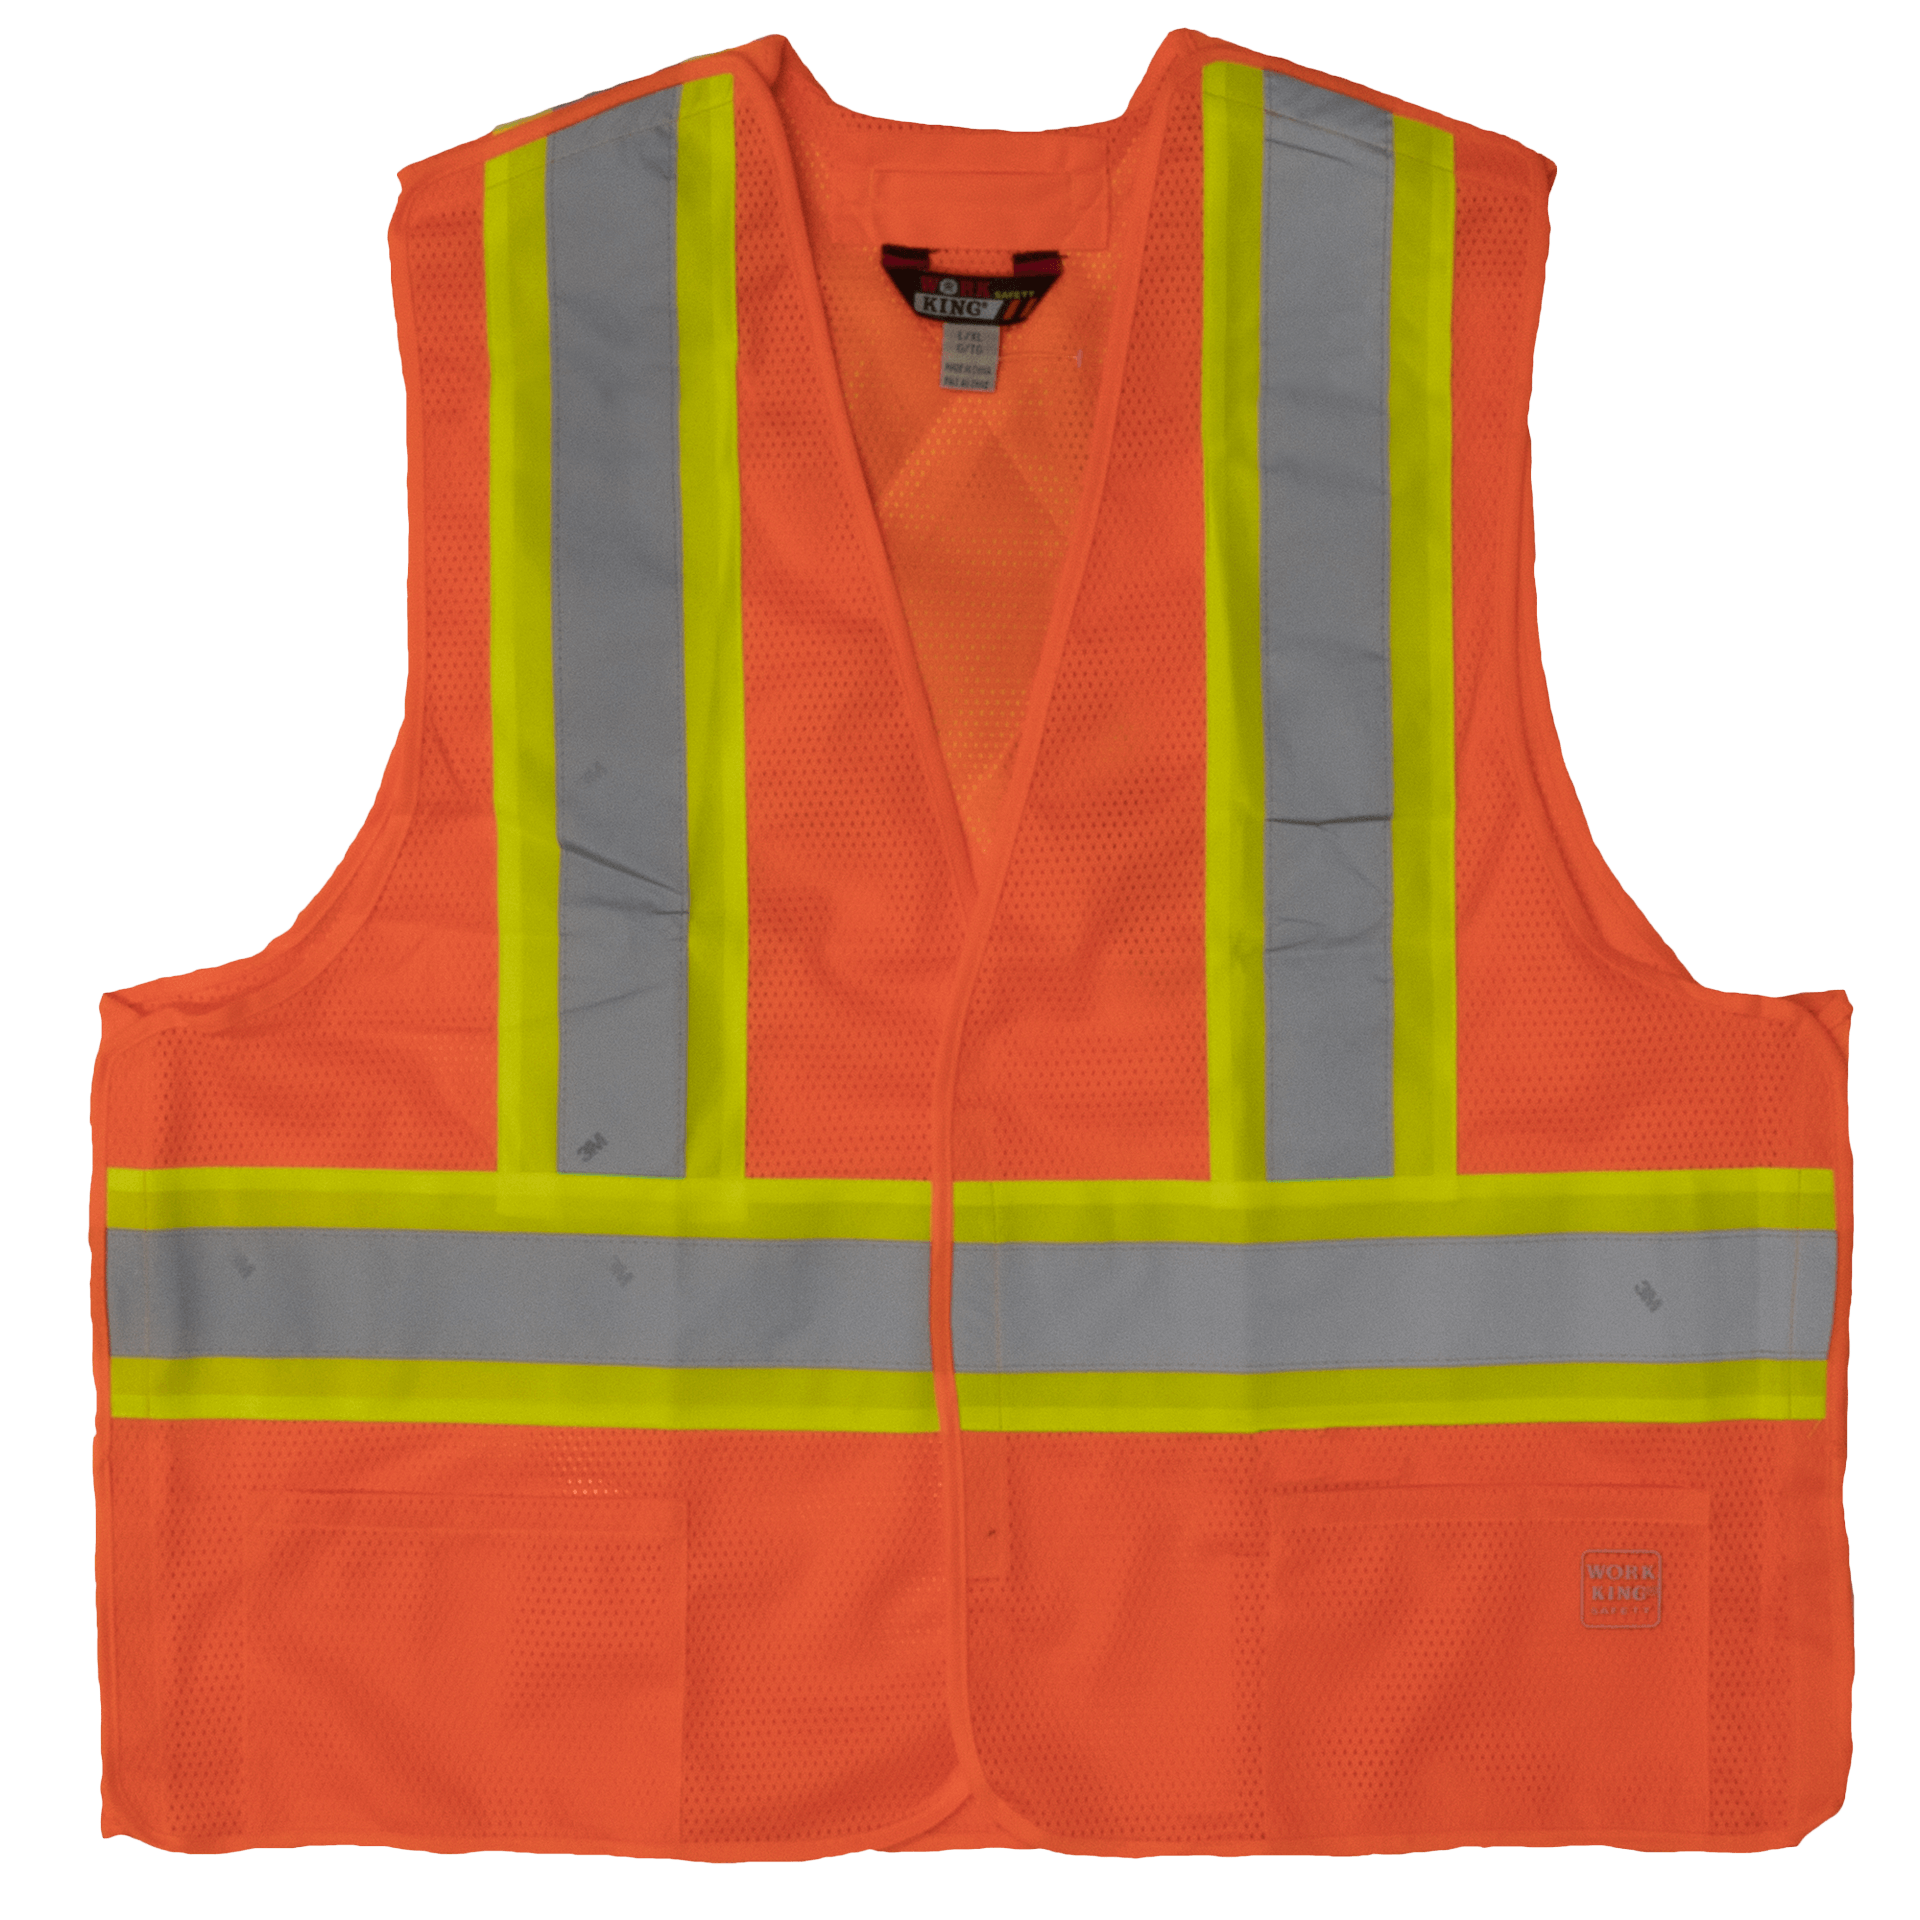 Tough Duck 5-Point Tearaway Safety Vest - S9i0 - Fluorescent Orange